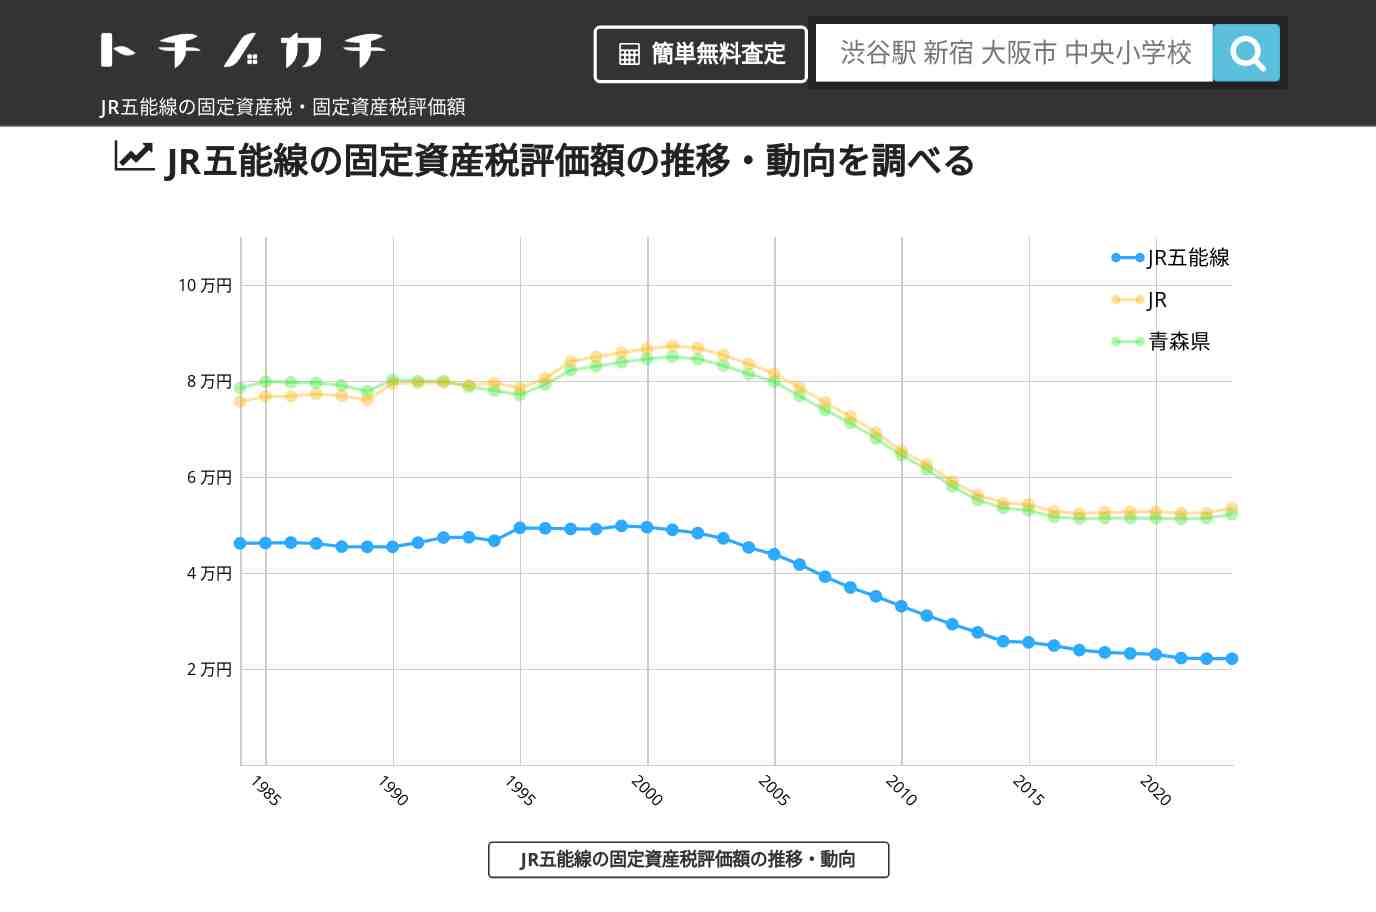 JR五能線(JR)の固定資産税・固定資産税評価額 | トチノカチ